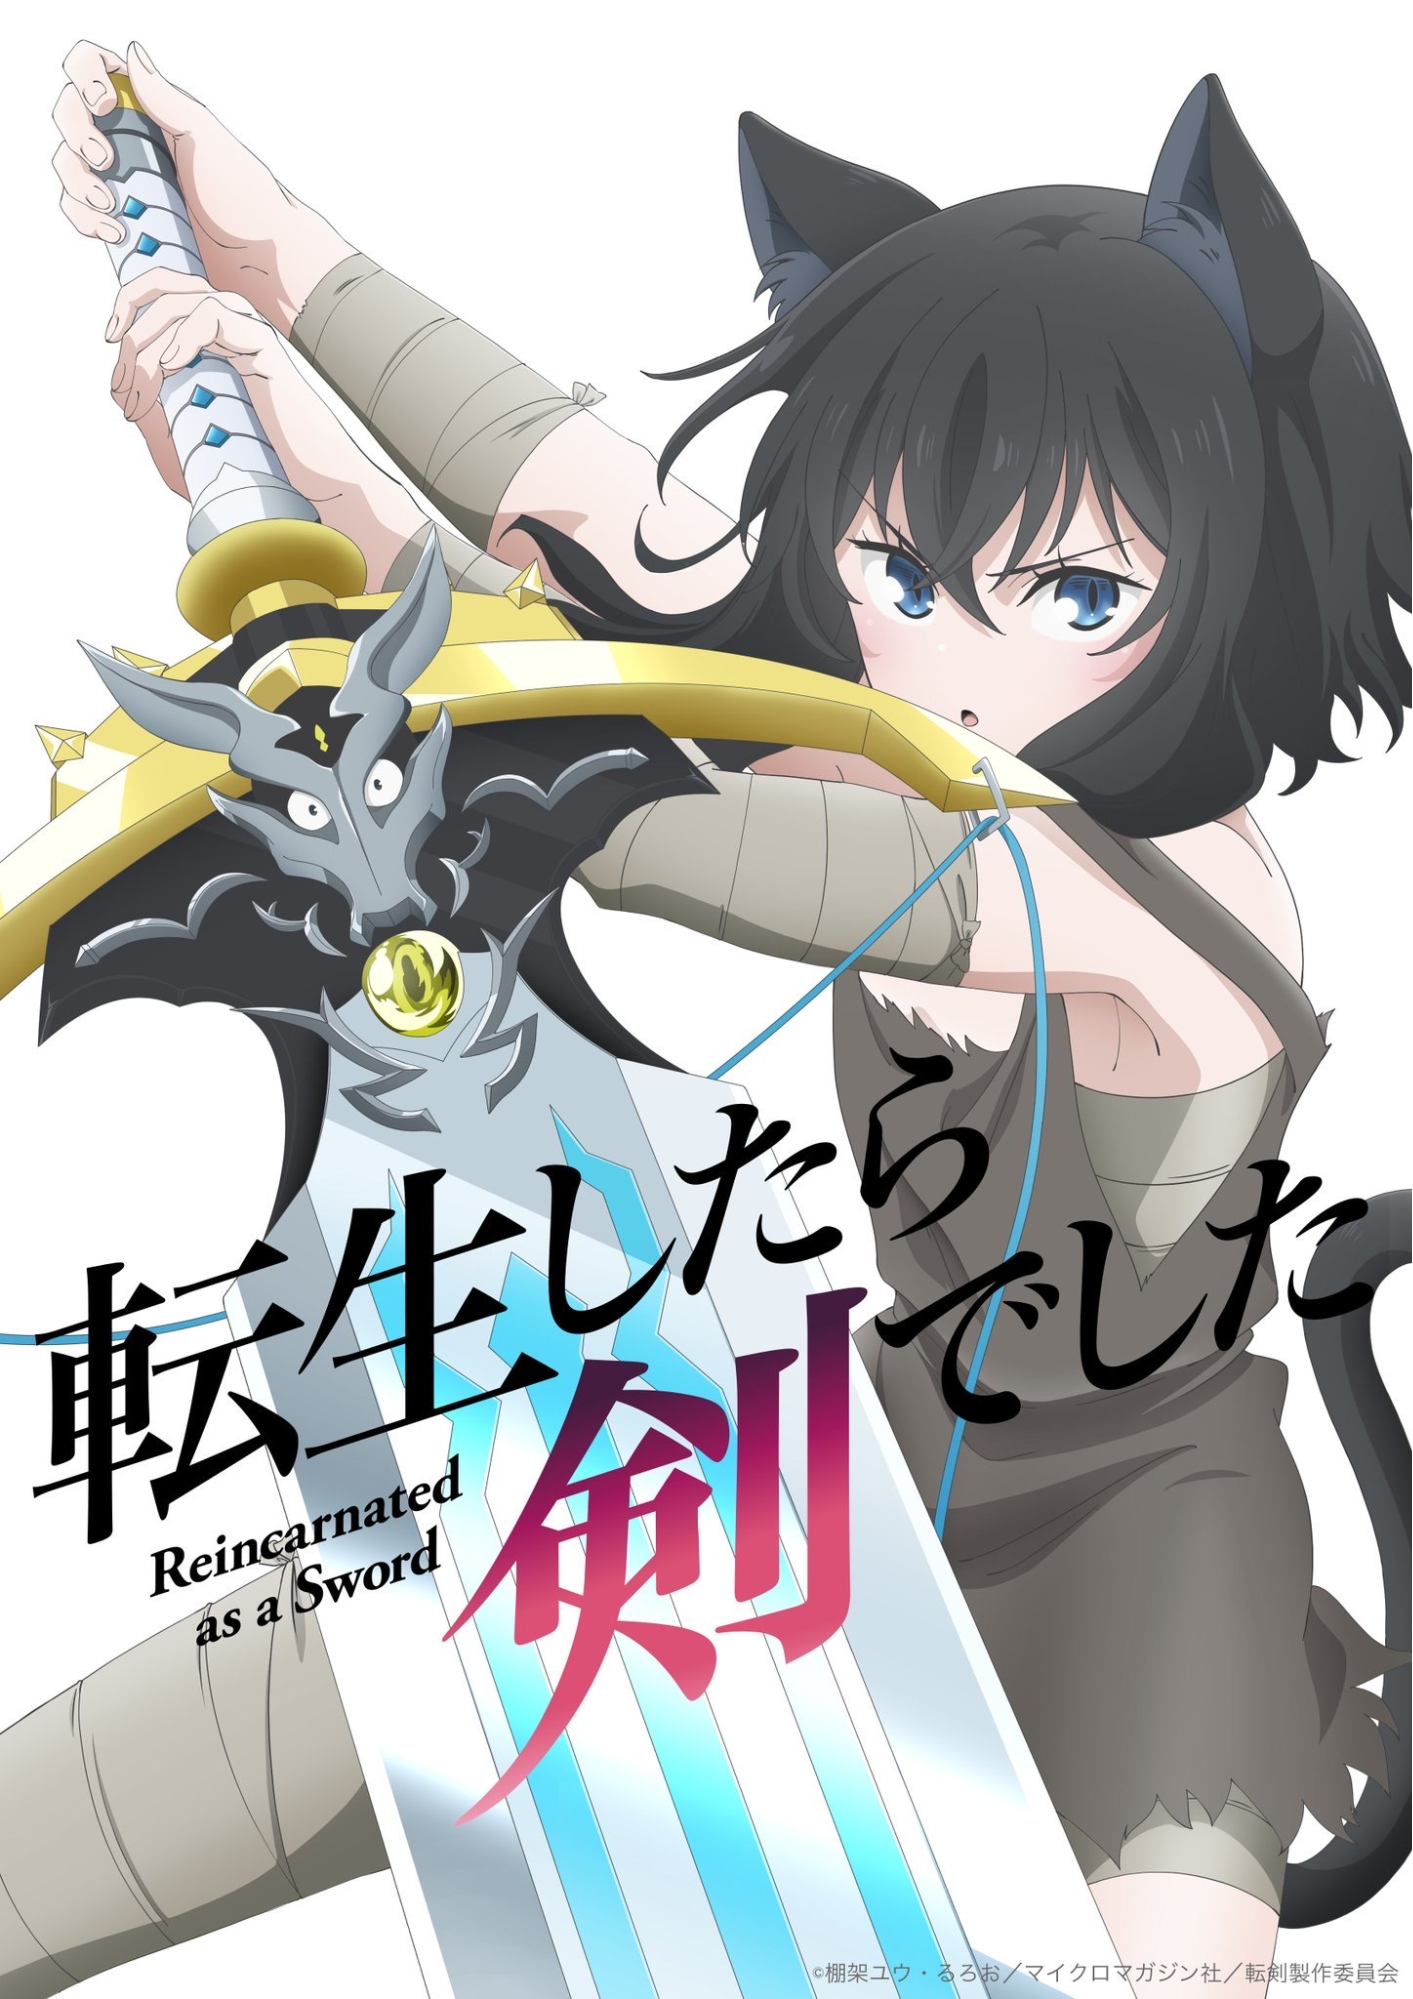 Fall 2022 anime - reincarnated as a sword poster